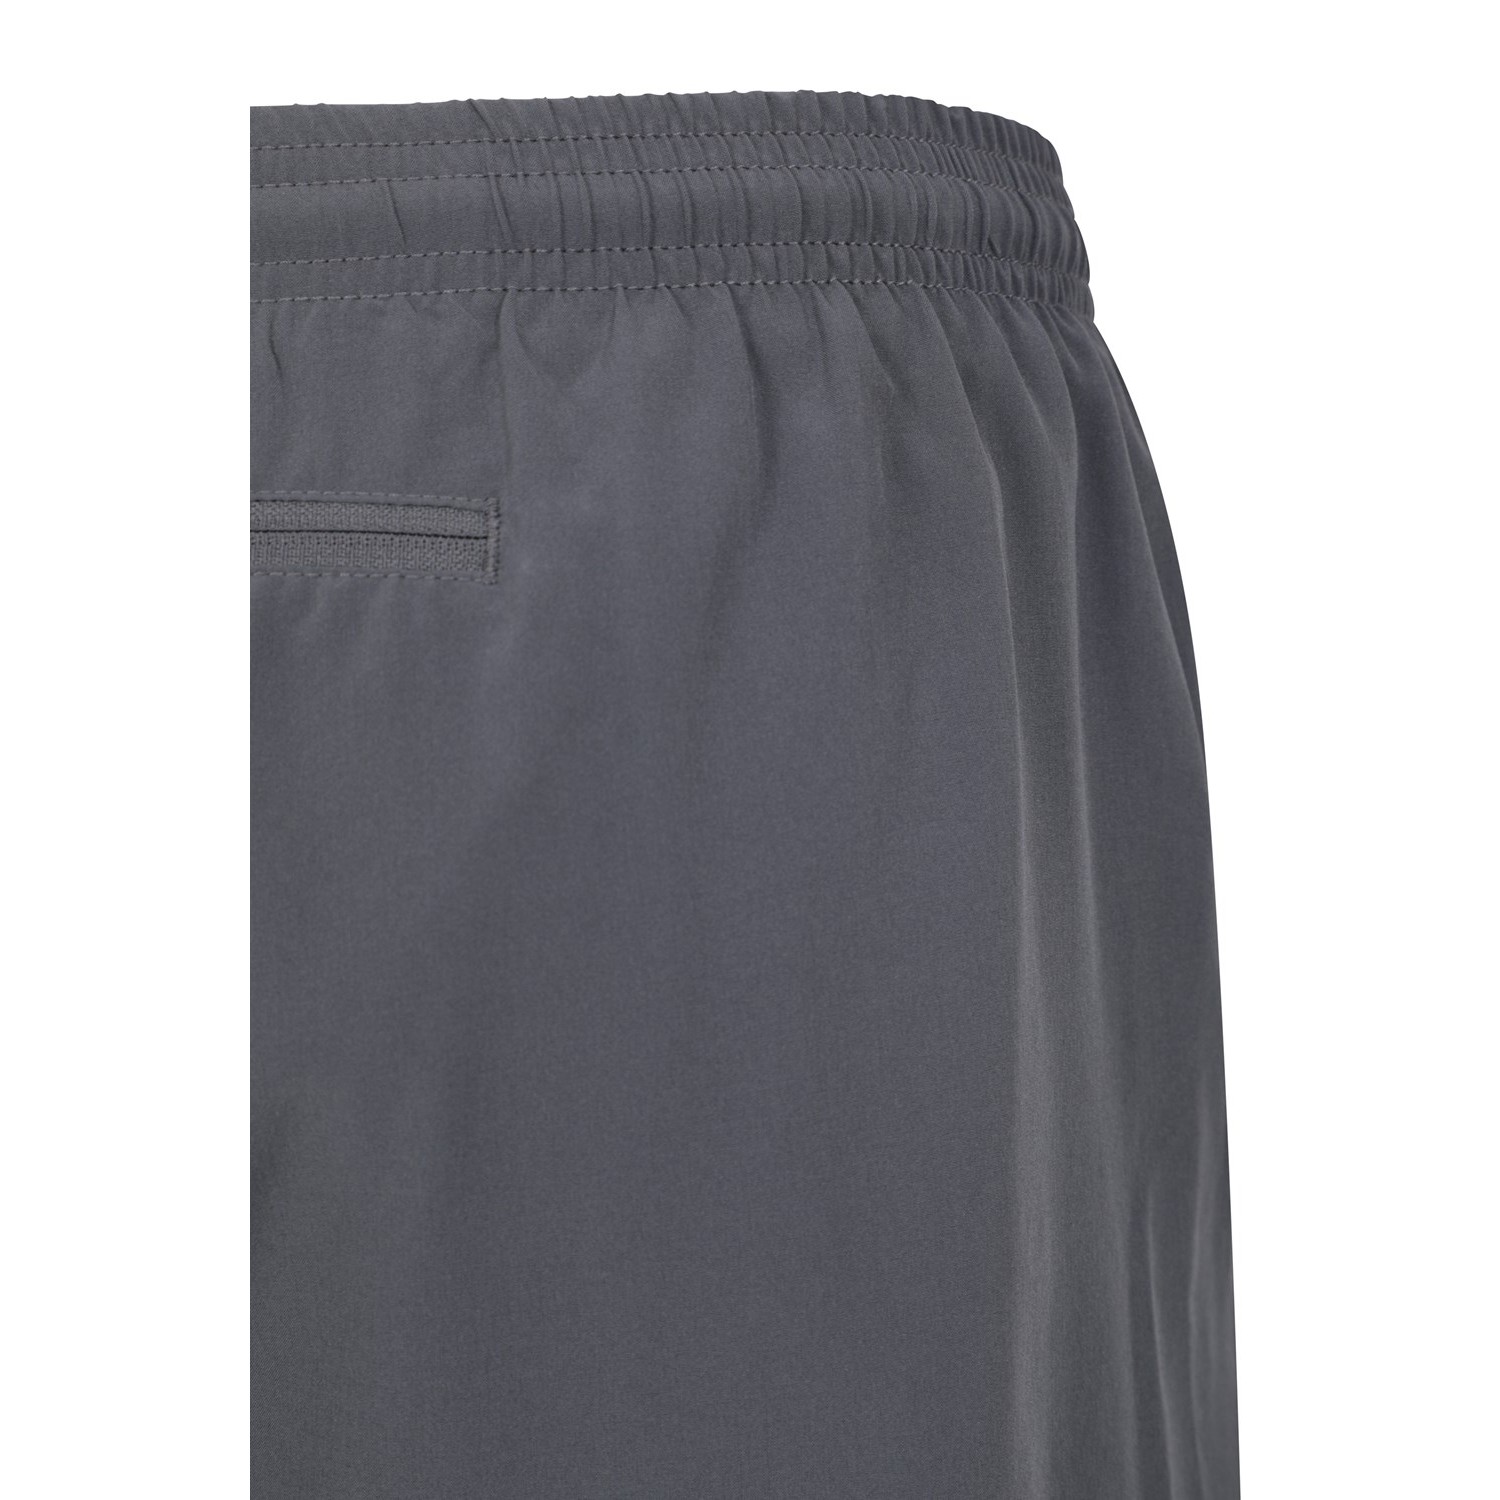 Pantalones Cortos Diseño 2 En 1 Mountain Warehouse Motion  MKP